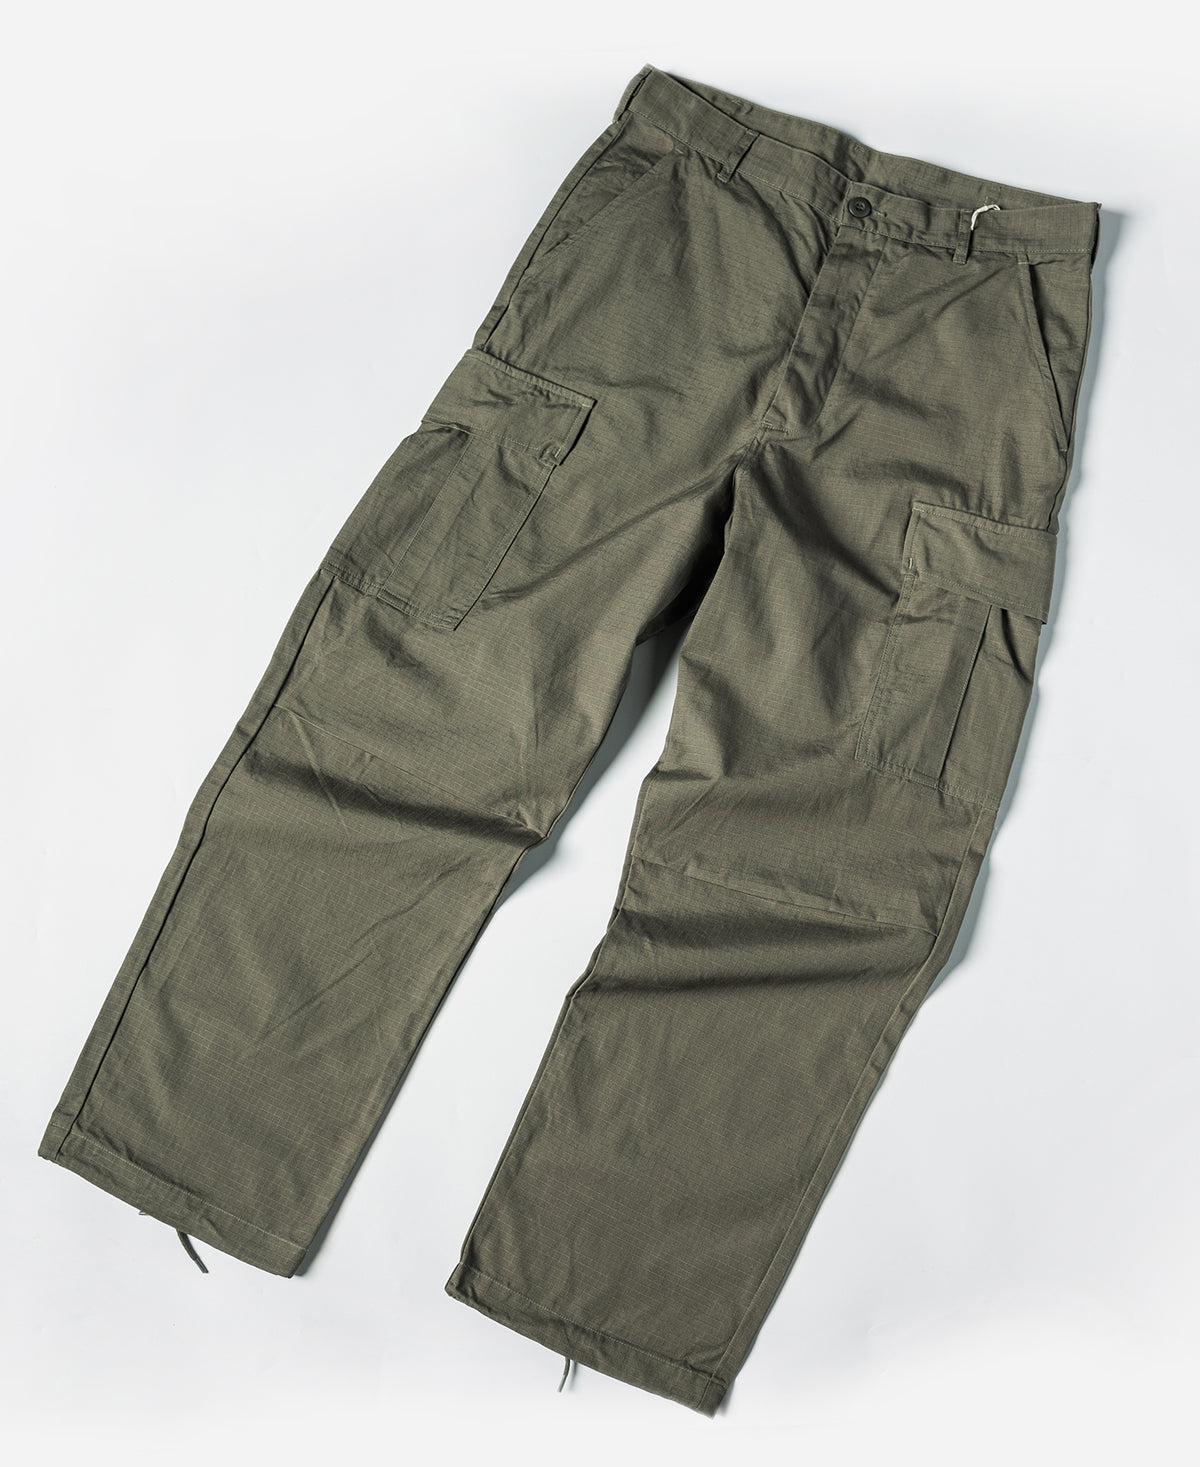 US Army 5th Model Tropical Jungle Fatigue Pants